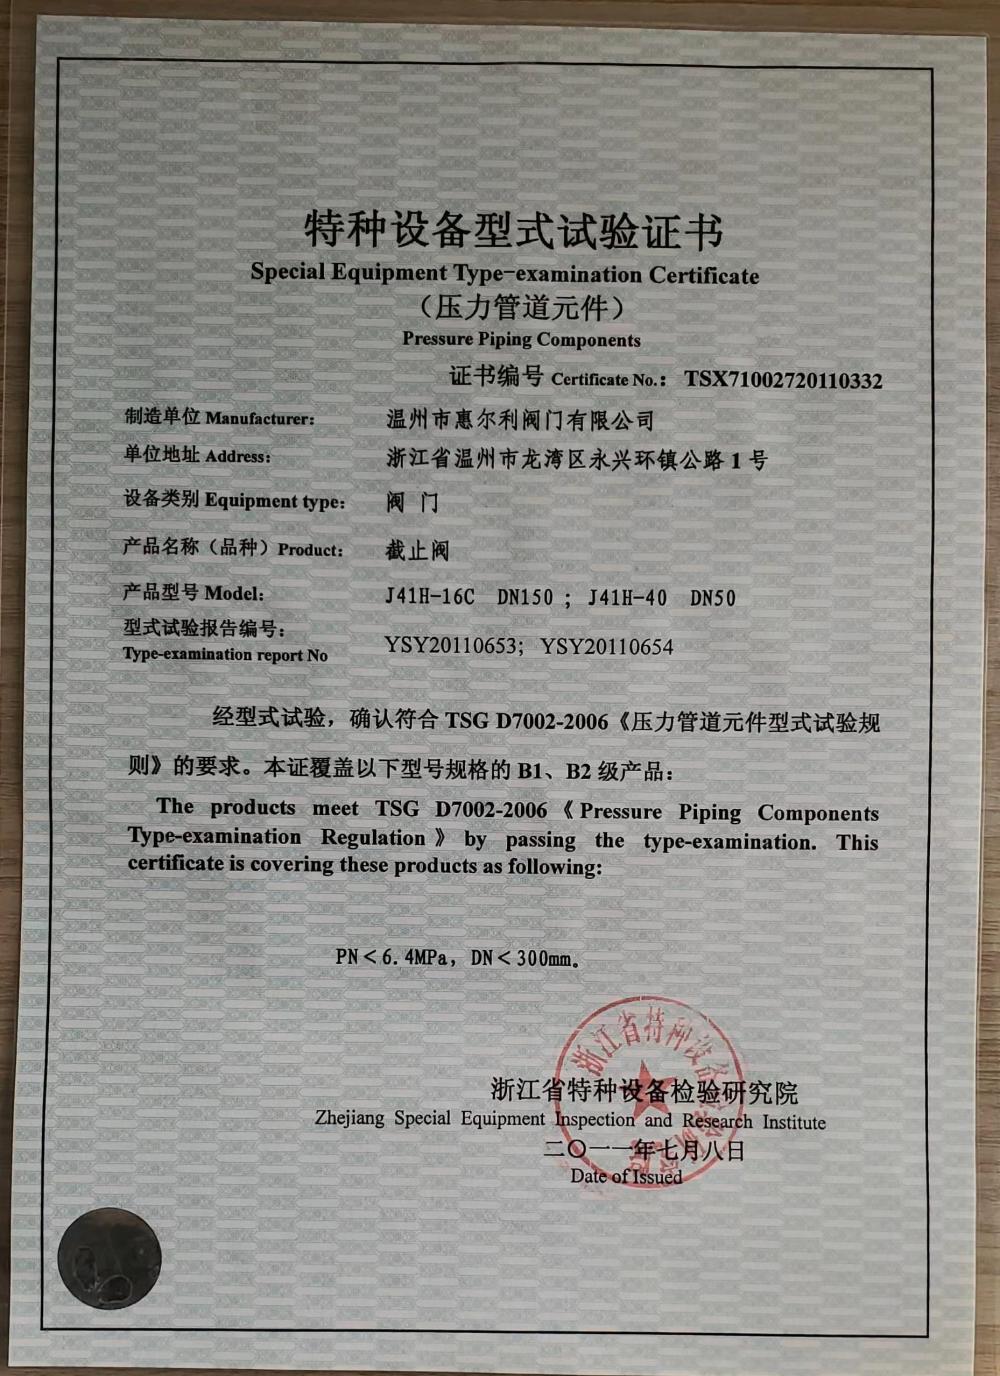 Special Equipment Type-examination Certificate